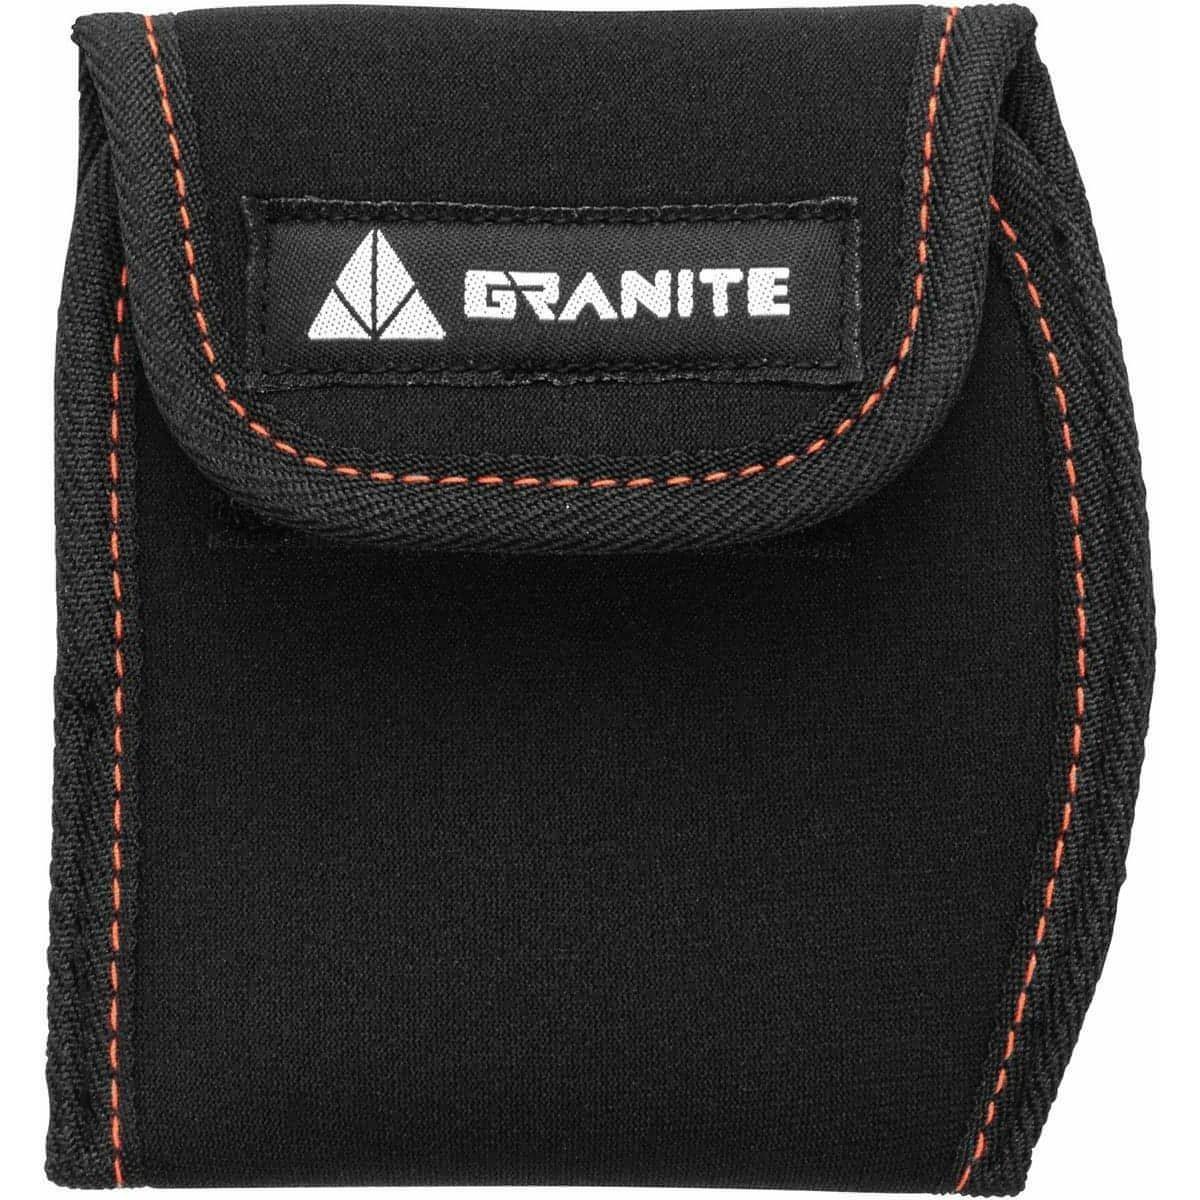 Granite Pita Pedal Covers - Small 4710139332328 - Start Fitness